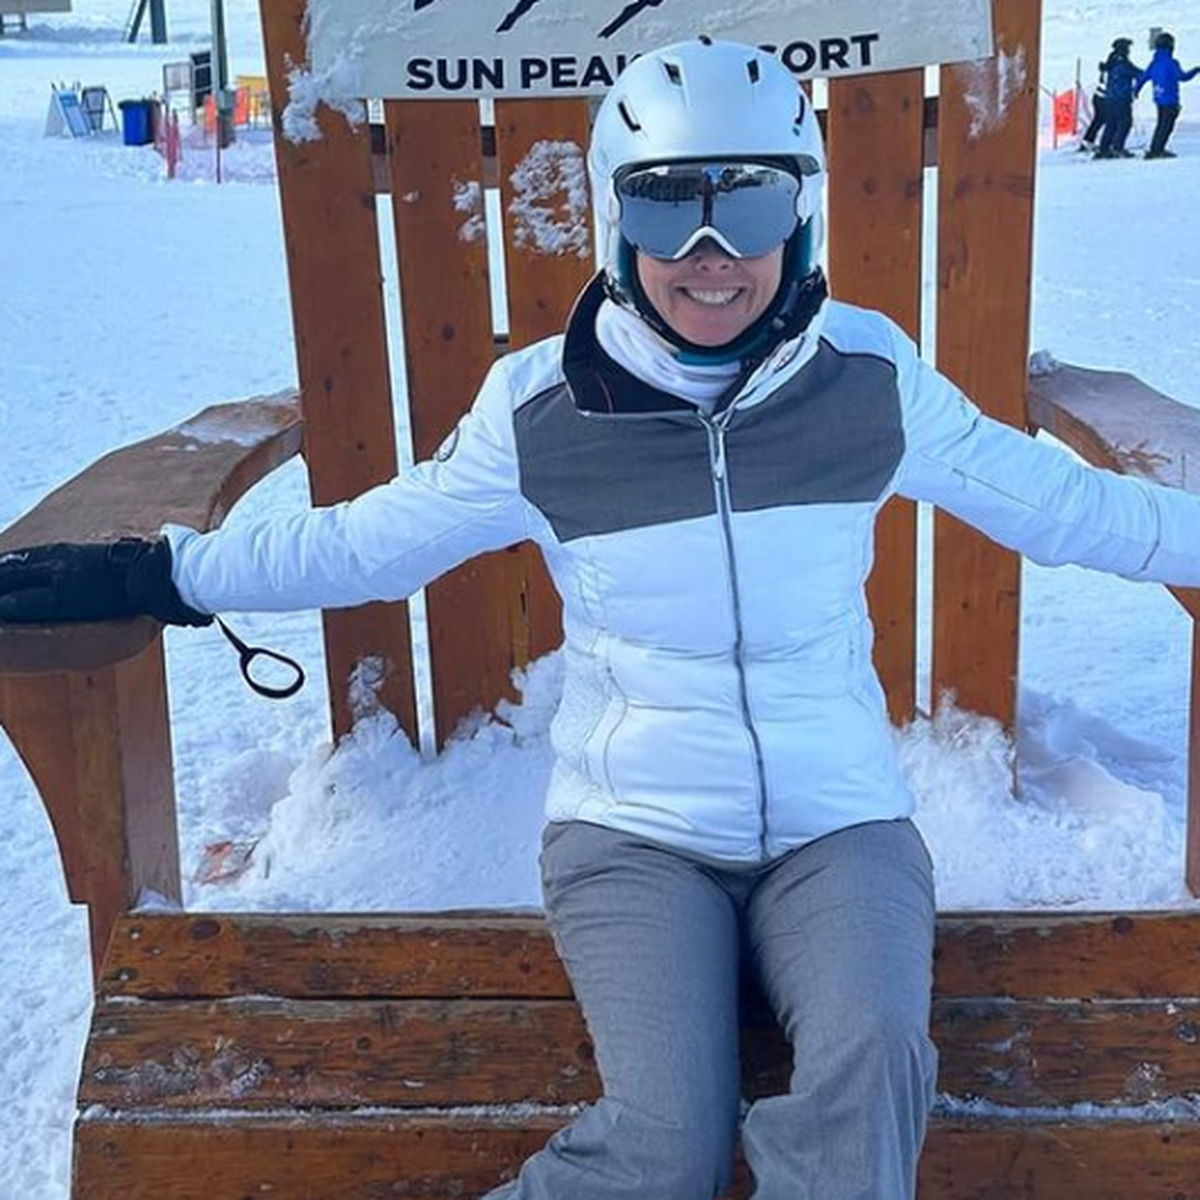 Canada family ski holiday: Sun Peaks resort review by Amber Sherlock